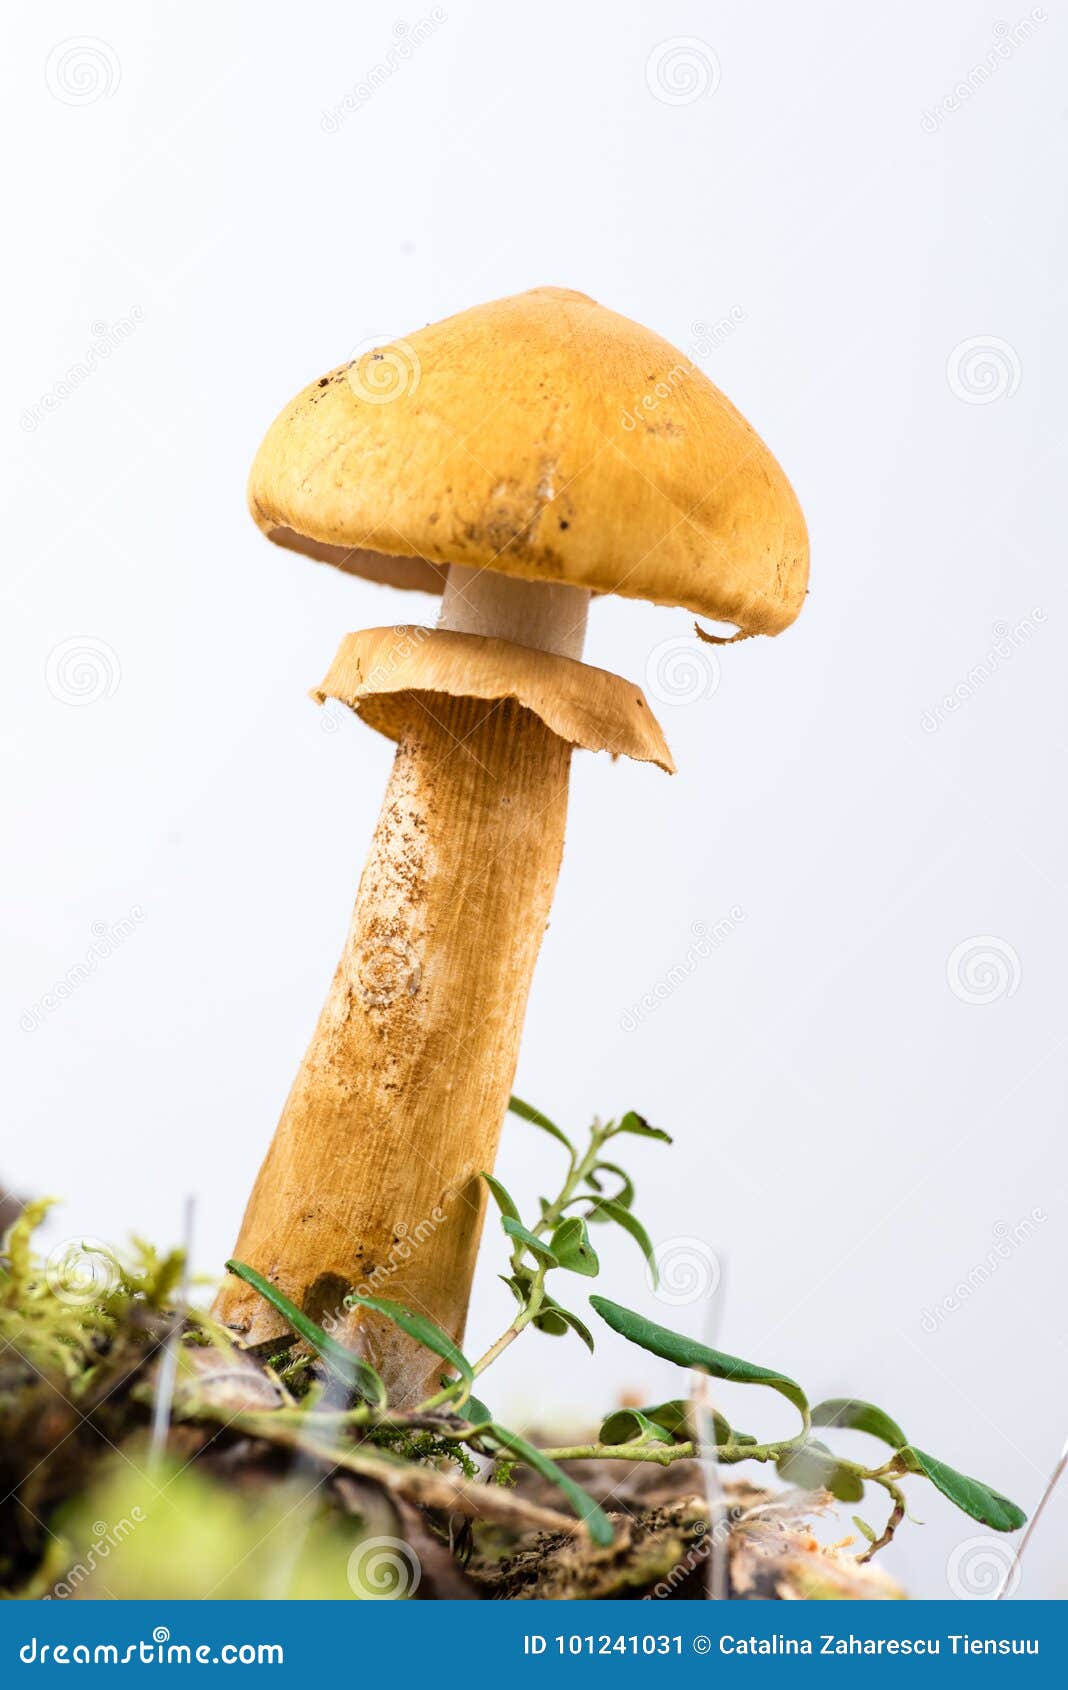 young golden bootleg mushroom